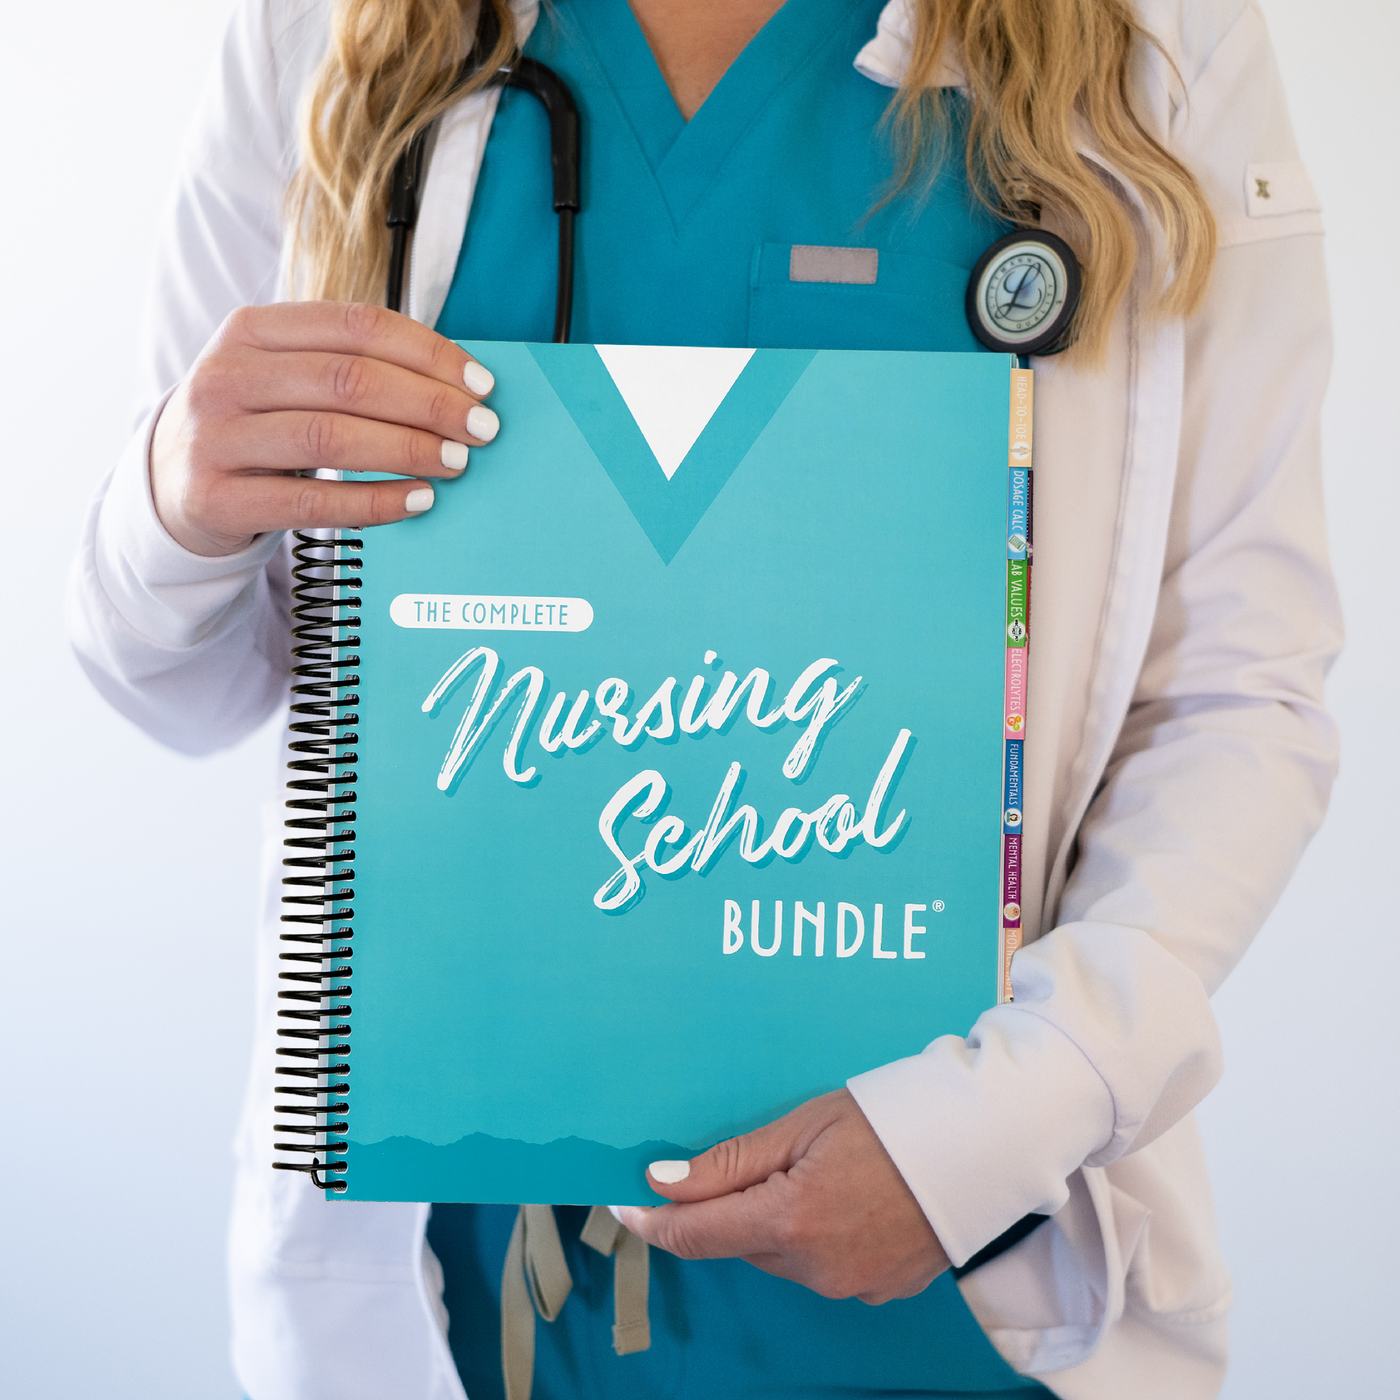 The Complete Nursing School Bundle®